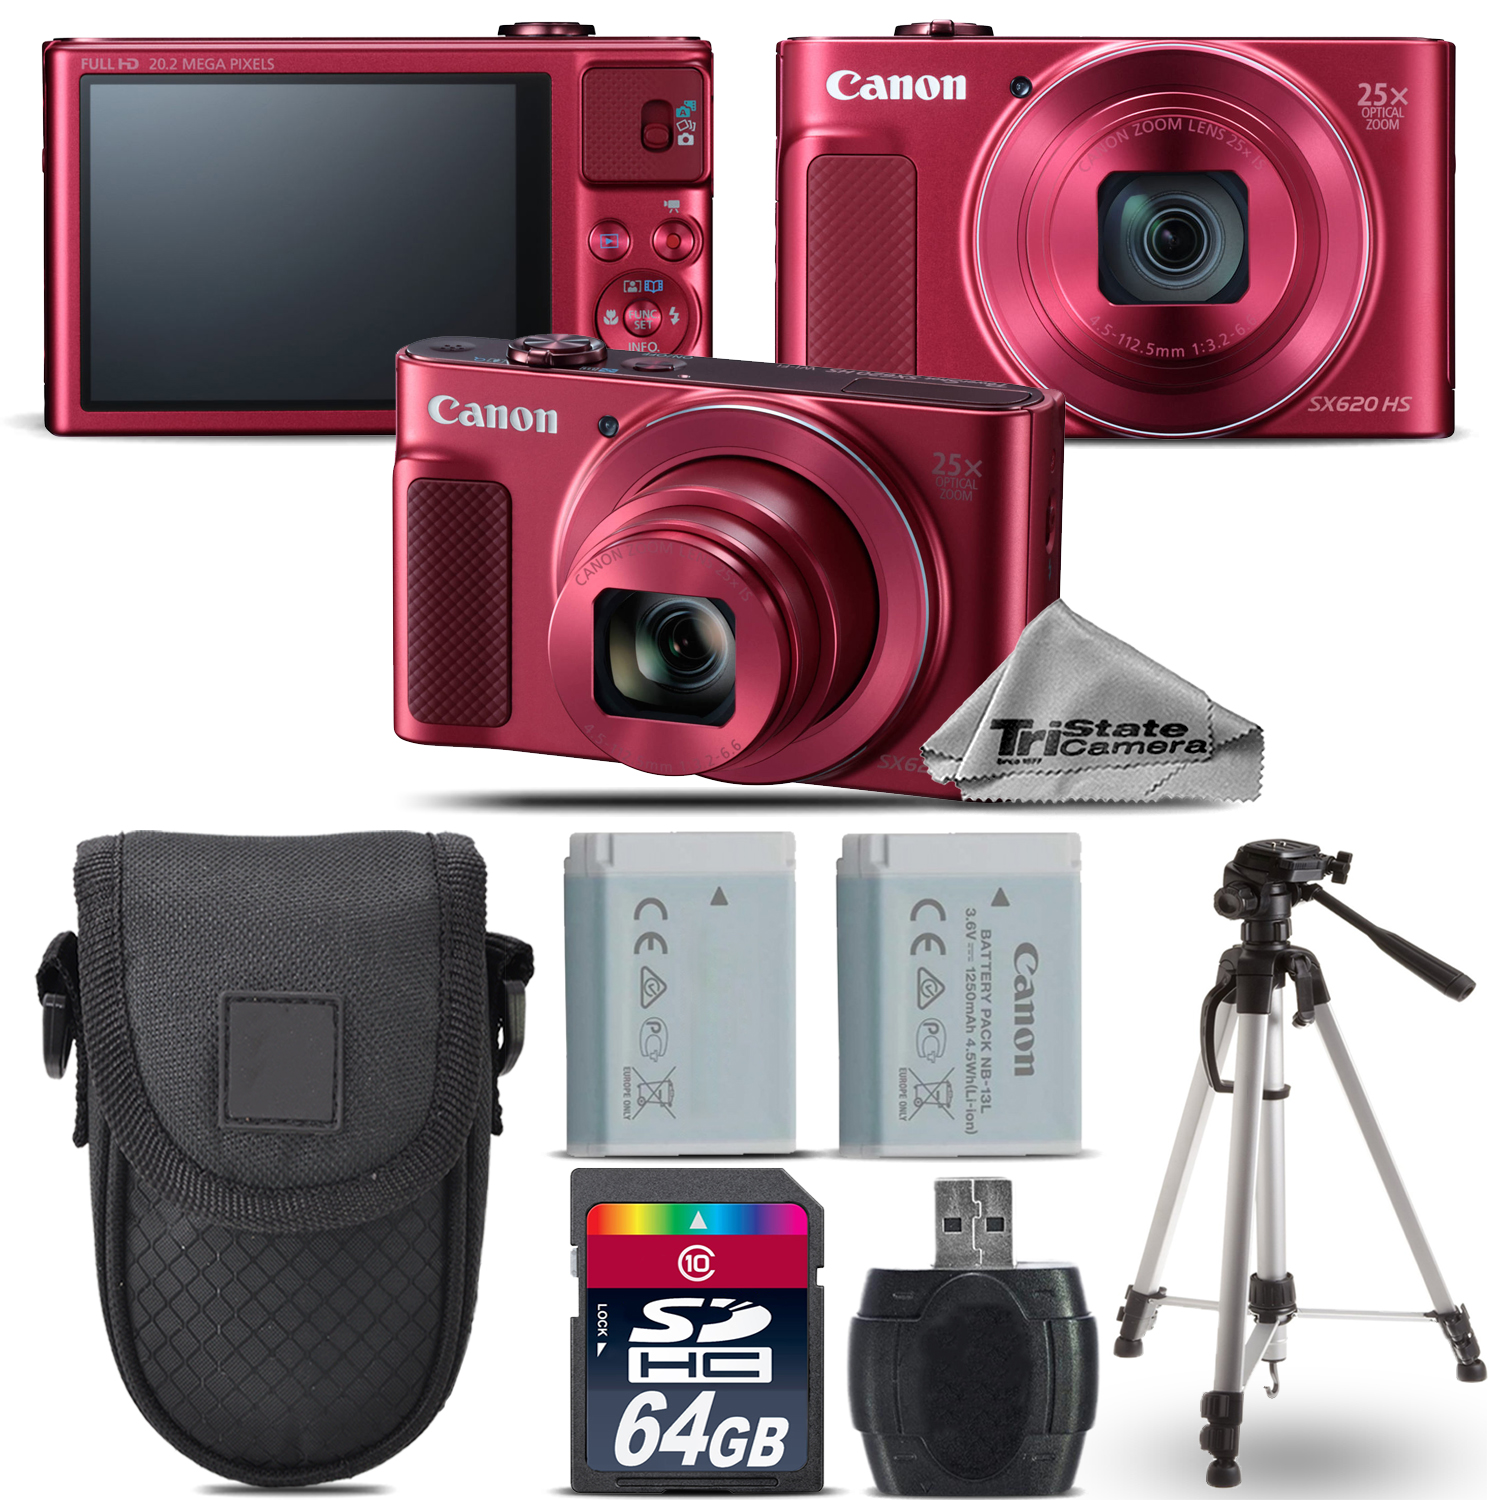 PowerShot SX620 HS Camera (RED) + Extra Battery +Tripod + Case -64GB Kit *FREE SHIPPING*